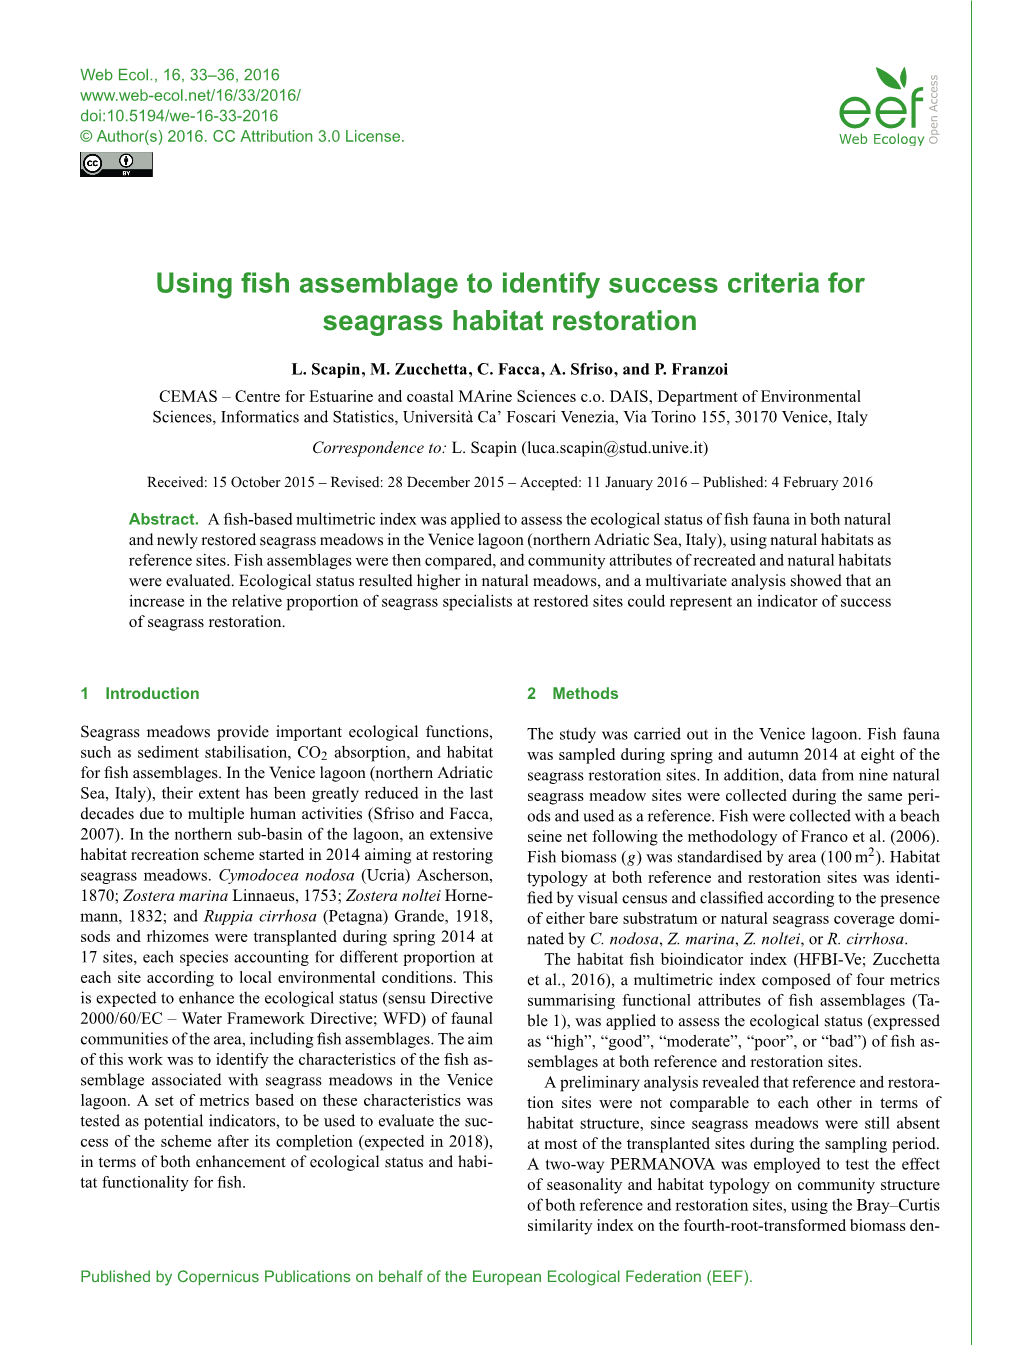 Using Fish Assemblage to Identify Success Criteria for Seagrass Habitat